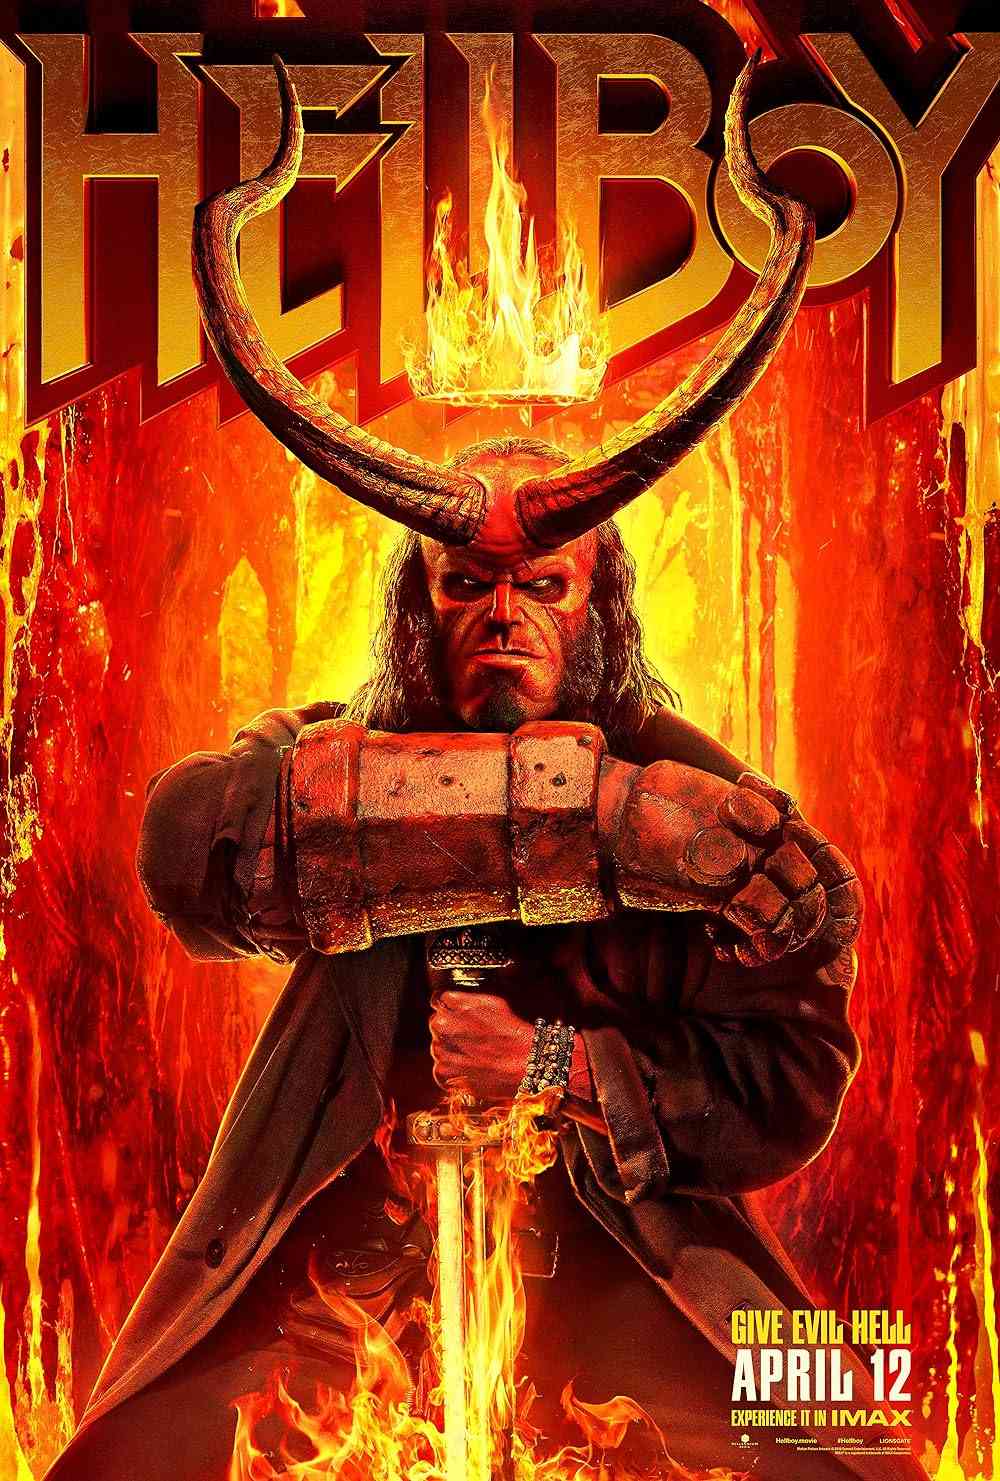 FULL MOVIE: Hellboy (2019)